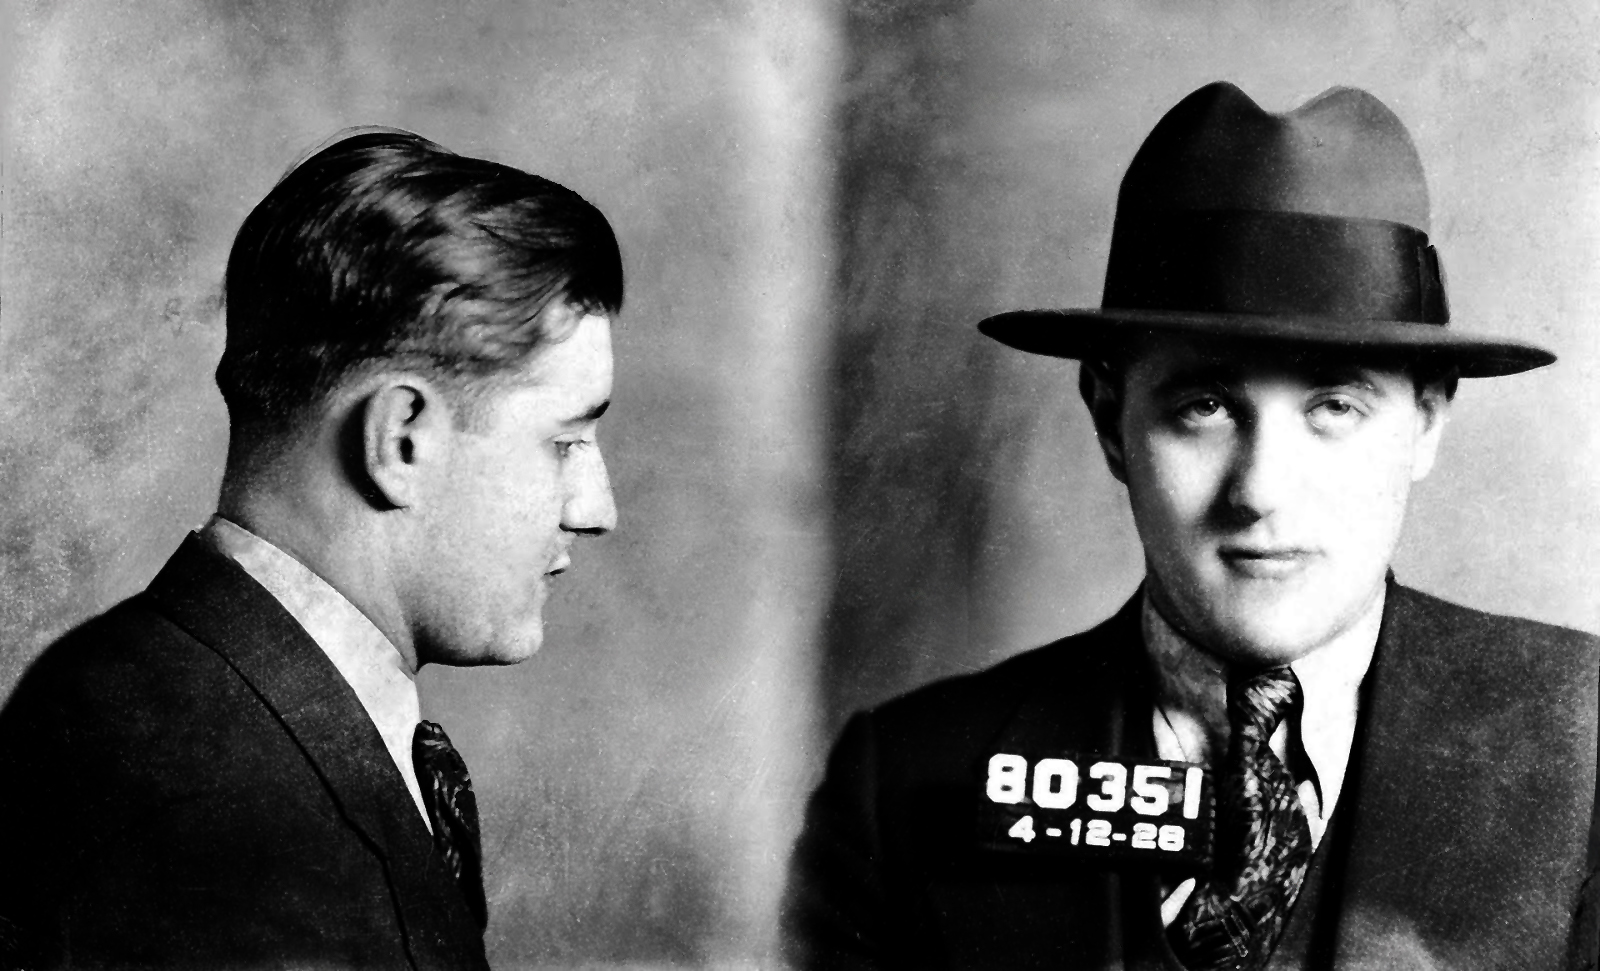 Mug shot of Benjamin Siegel, Jewish-American Mobster, taken by the New York Police Department, 1920s